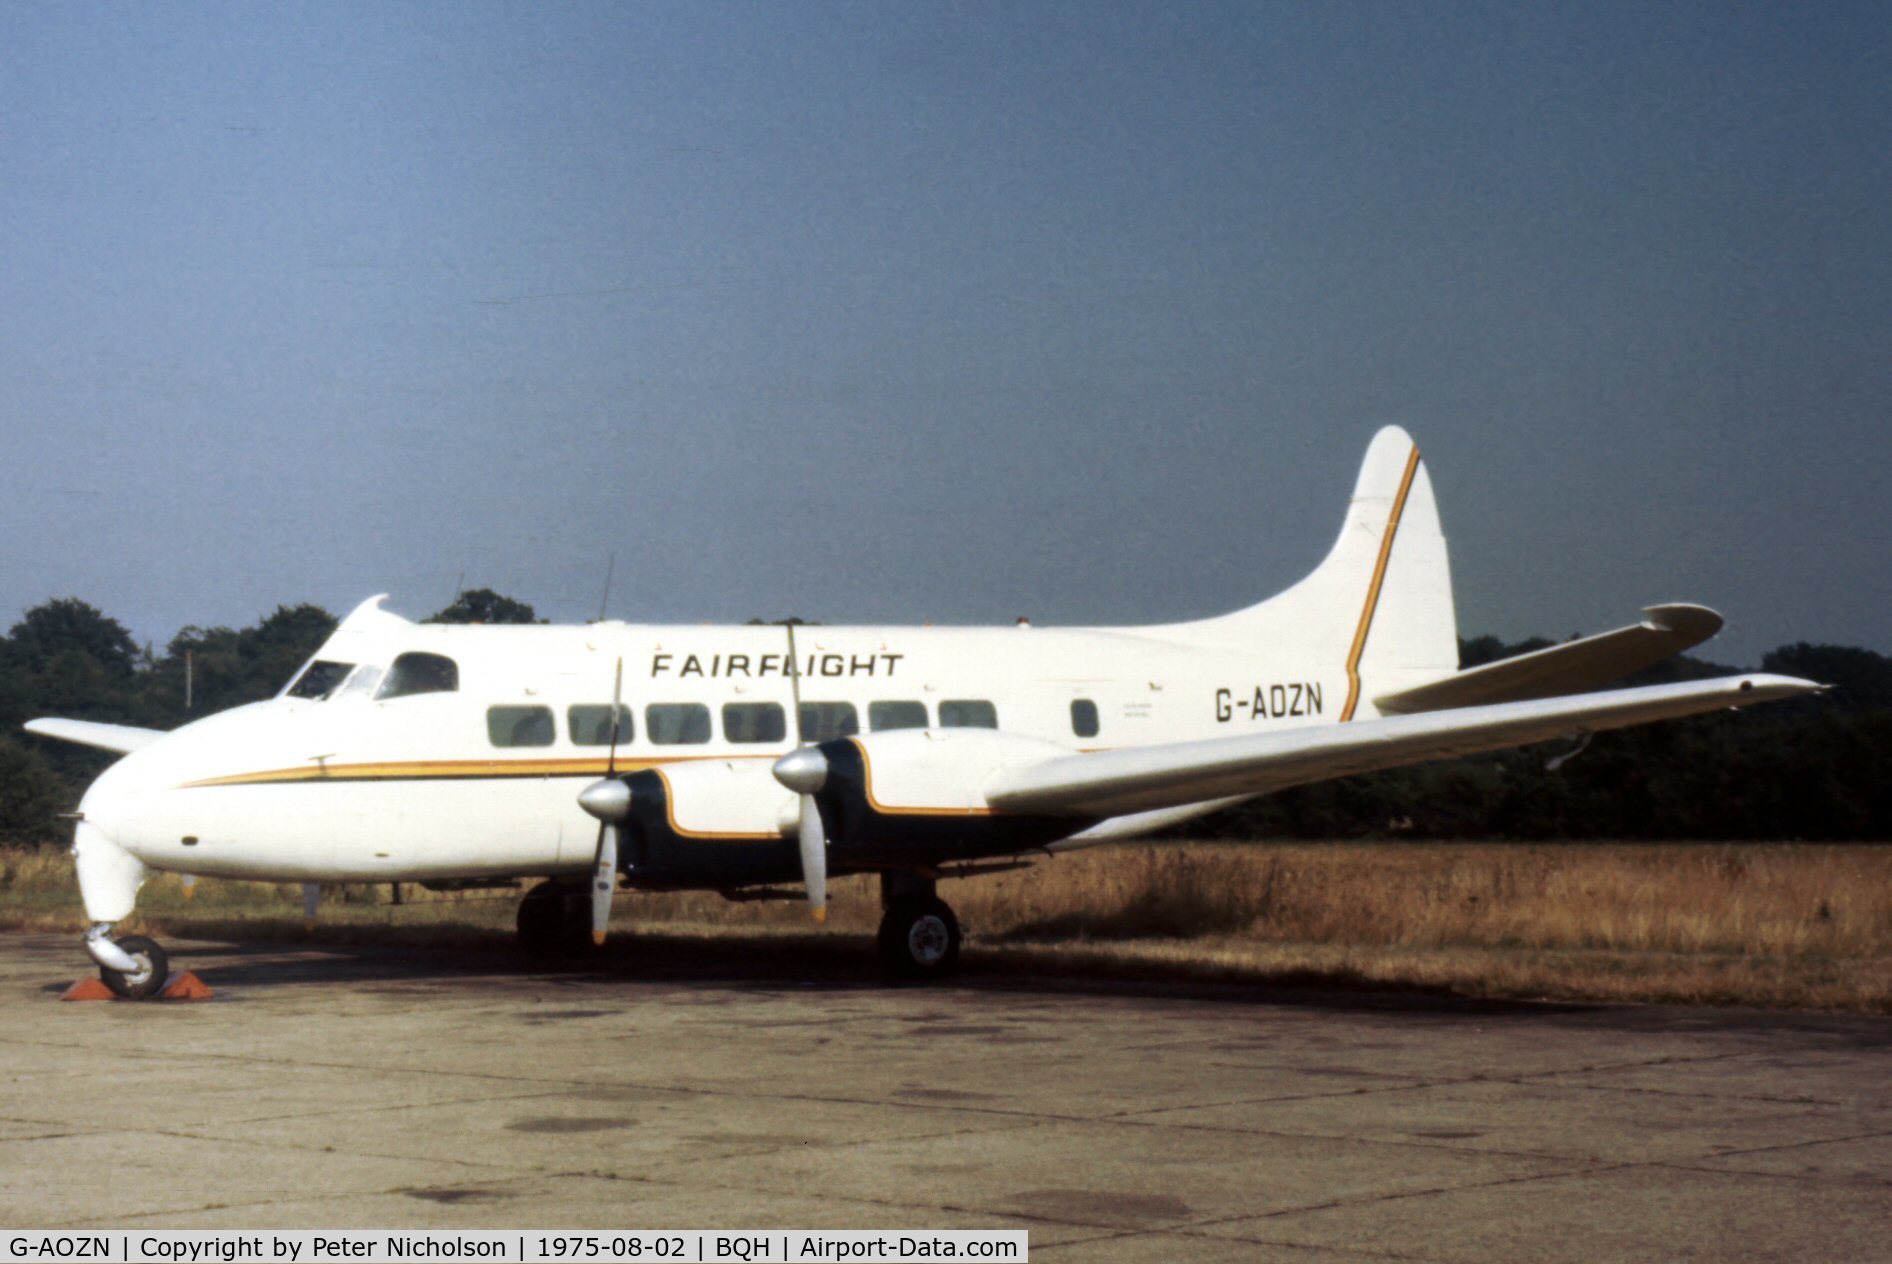 G-AOZN, 1952 De Havilland DH.114 Heron 1B C/N 14005, Heron 1B of Fairflight Charters at Biggin Hill in the Summer of 1975.